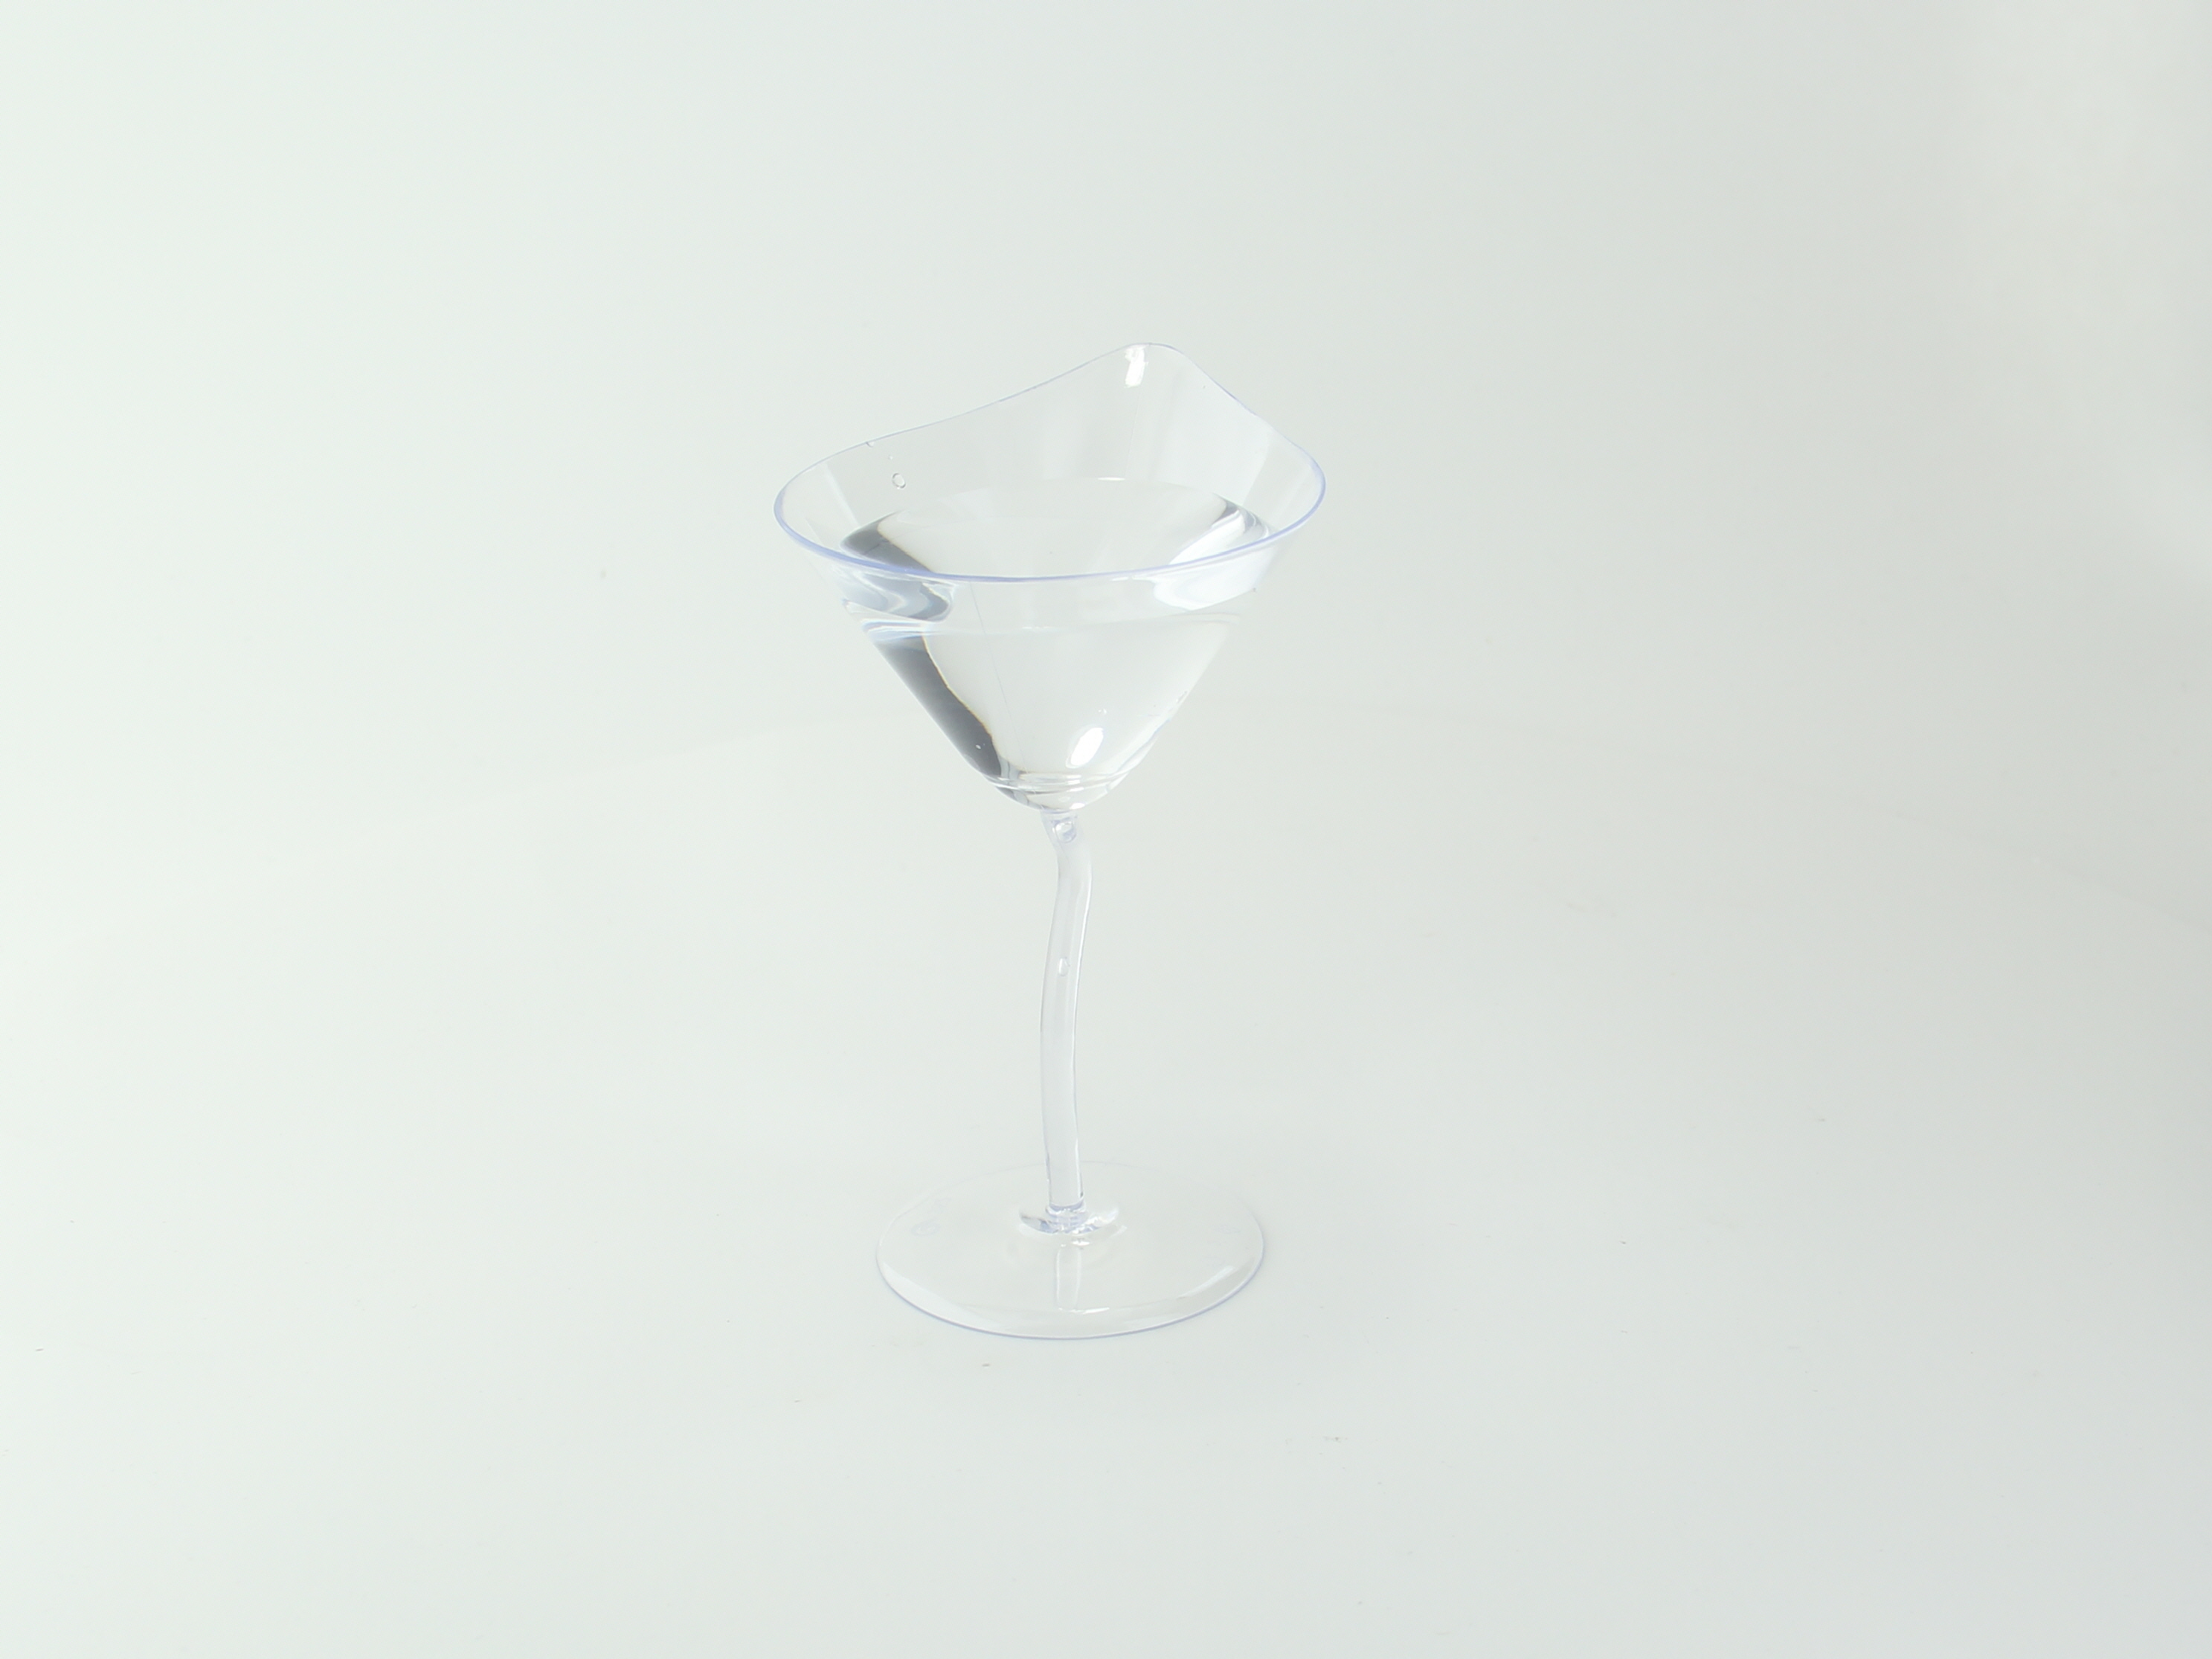 Mini Martini Cup 2oz 3 x 3.75 x 4.5in - 5 pcs - BioandChic